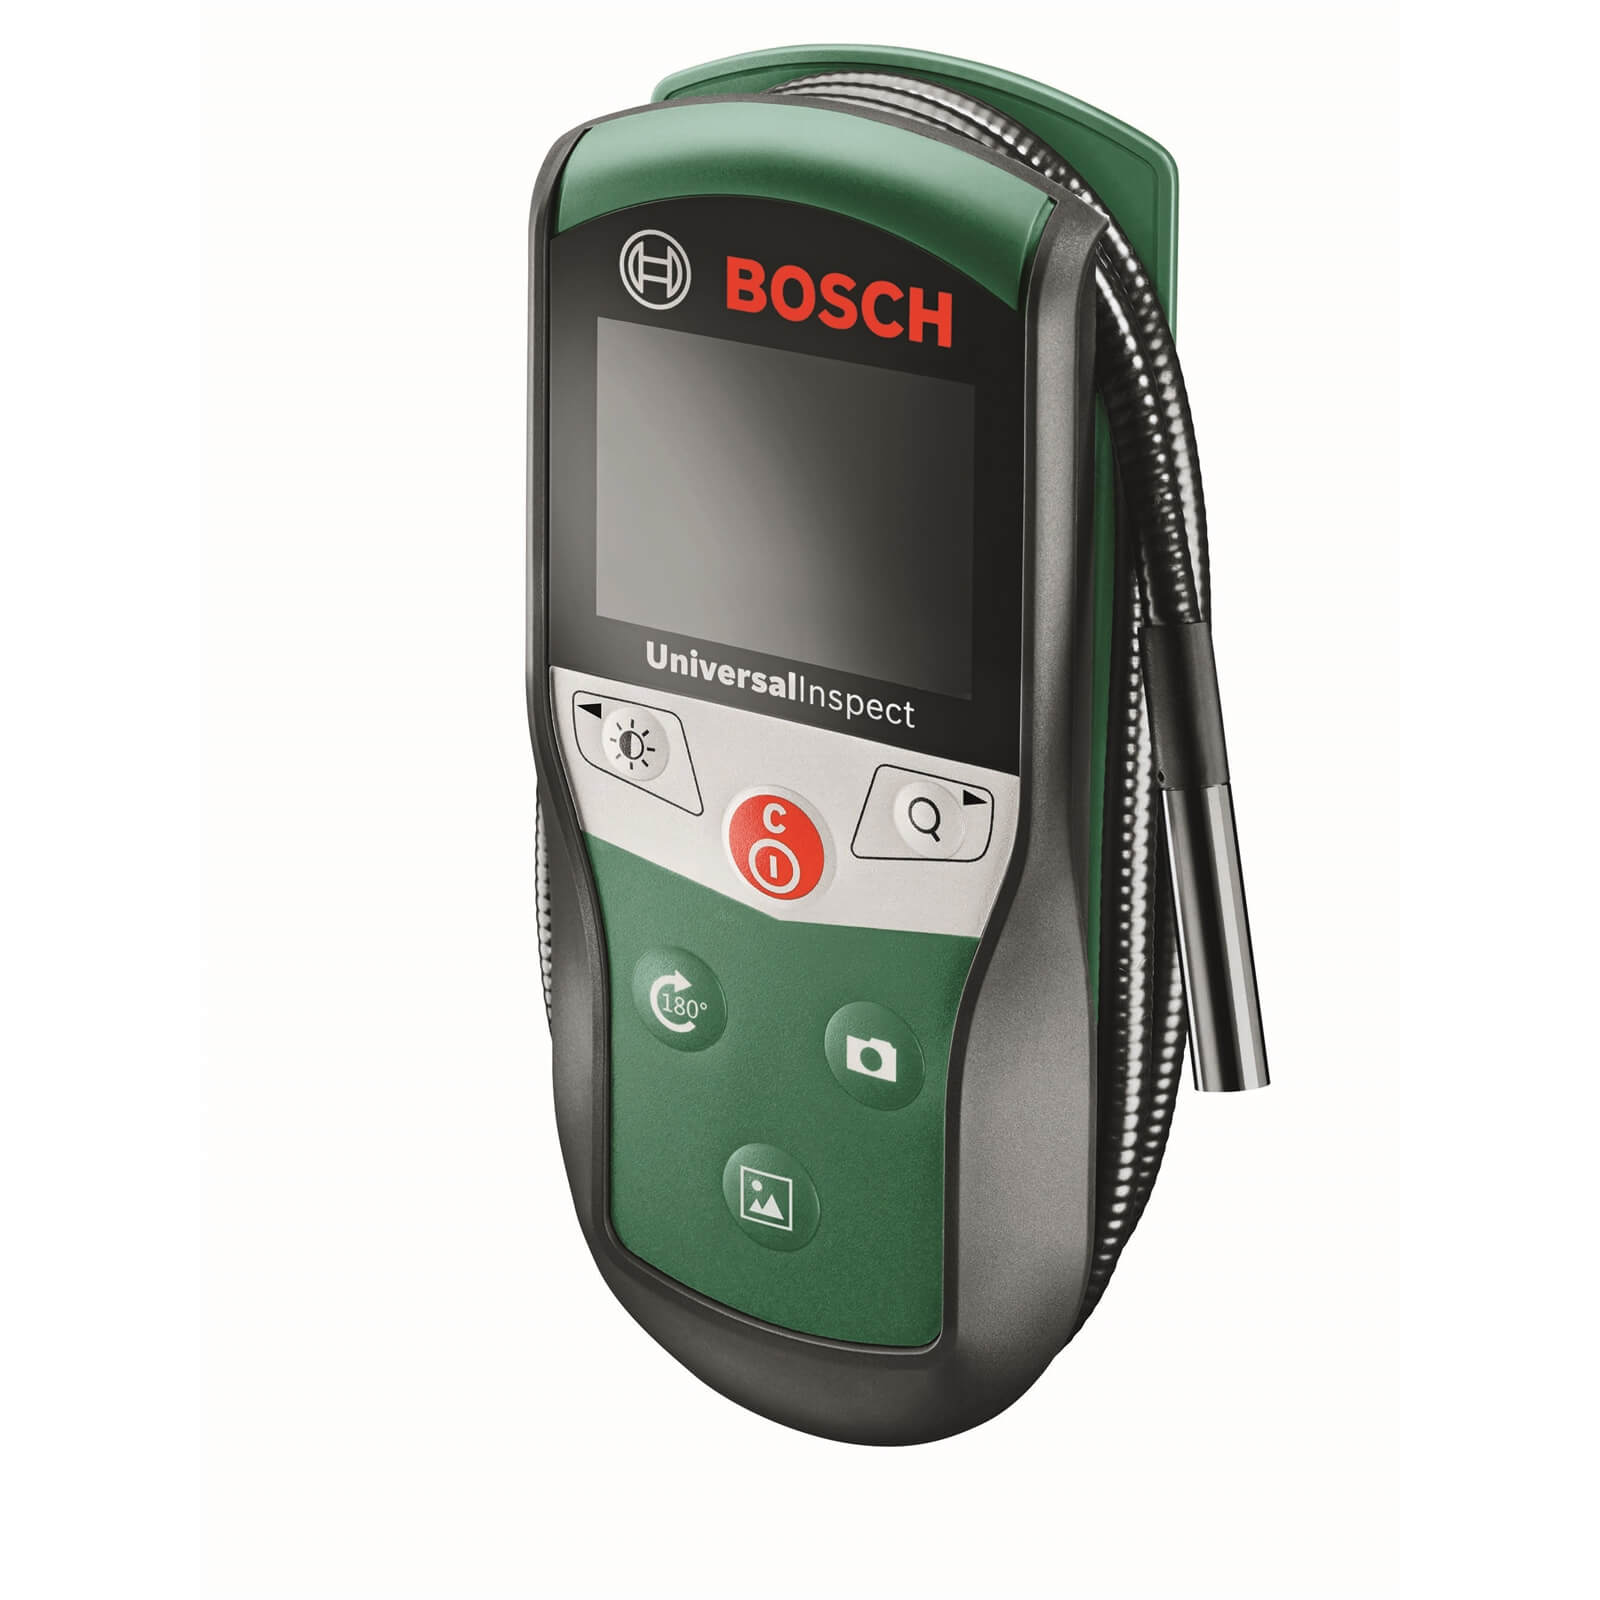 Photo of Bosch Universalinspect Inspection Camera